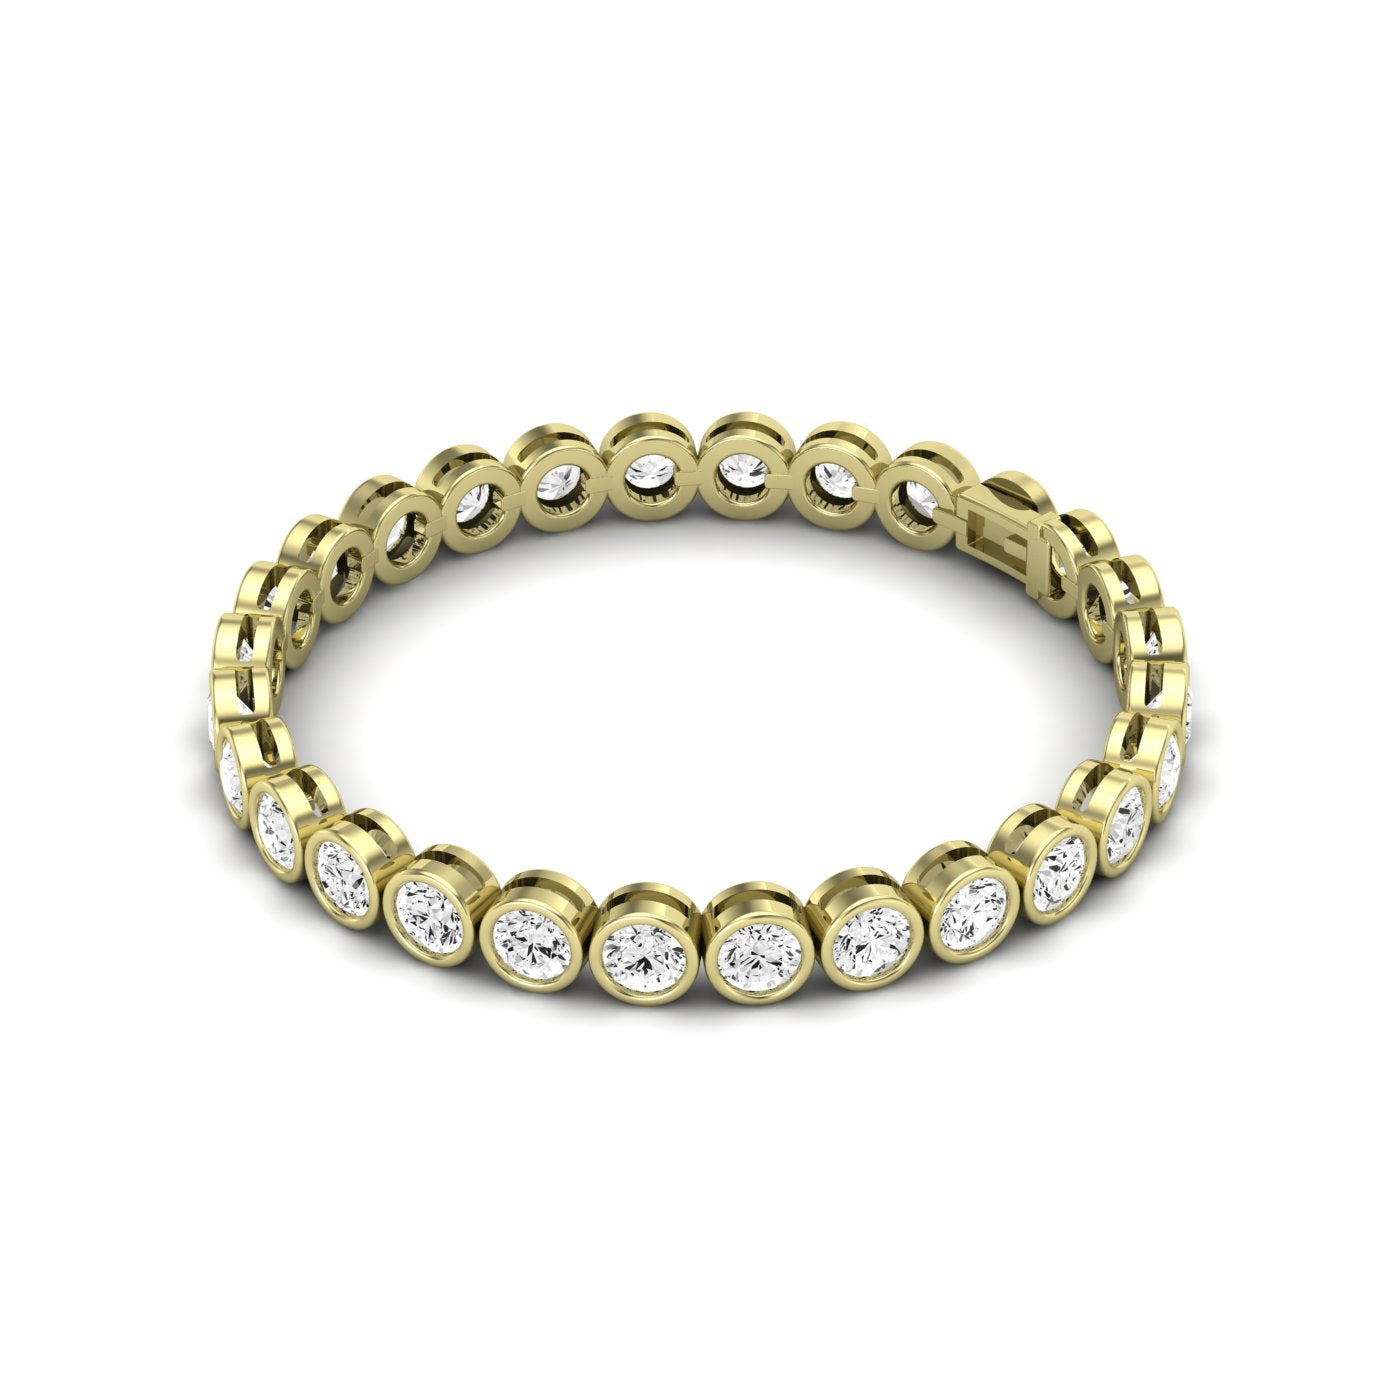 sydney round bezel set modern moissanite bracelet 14k yellow gold / 4.76 ct total weight